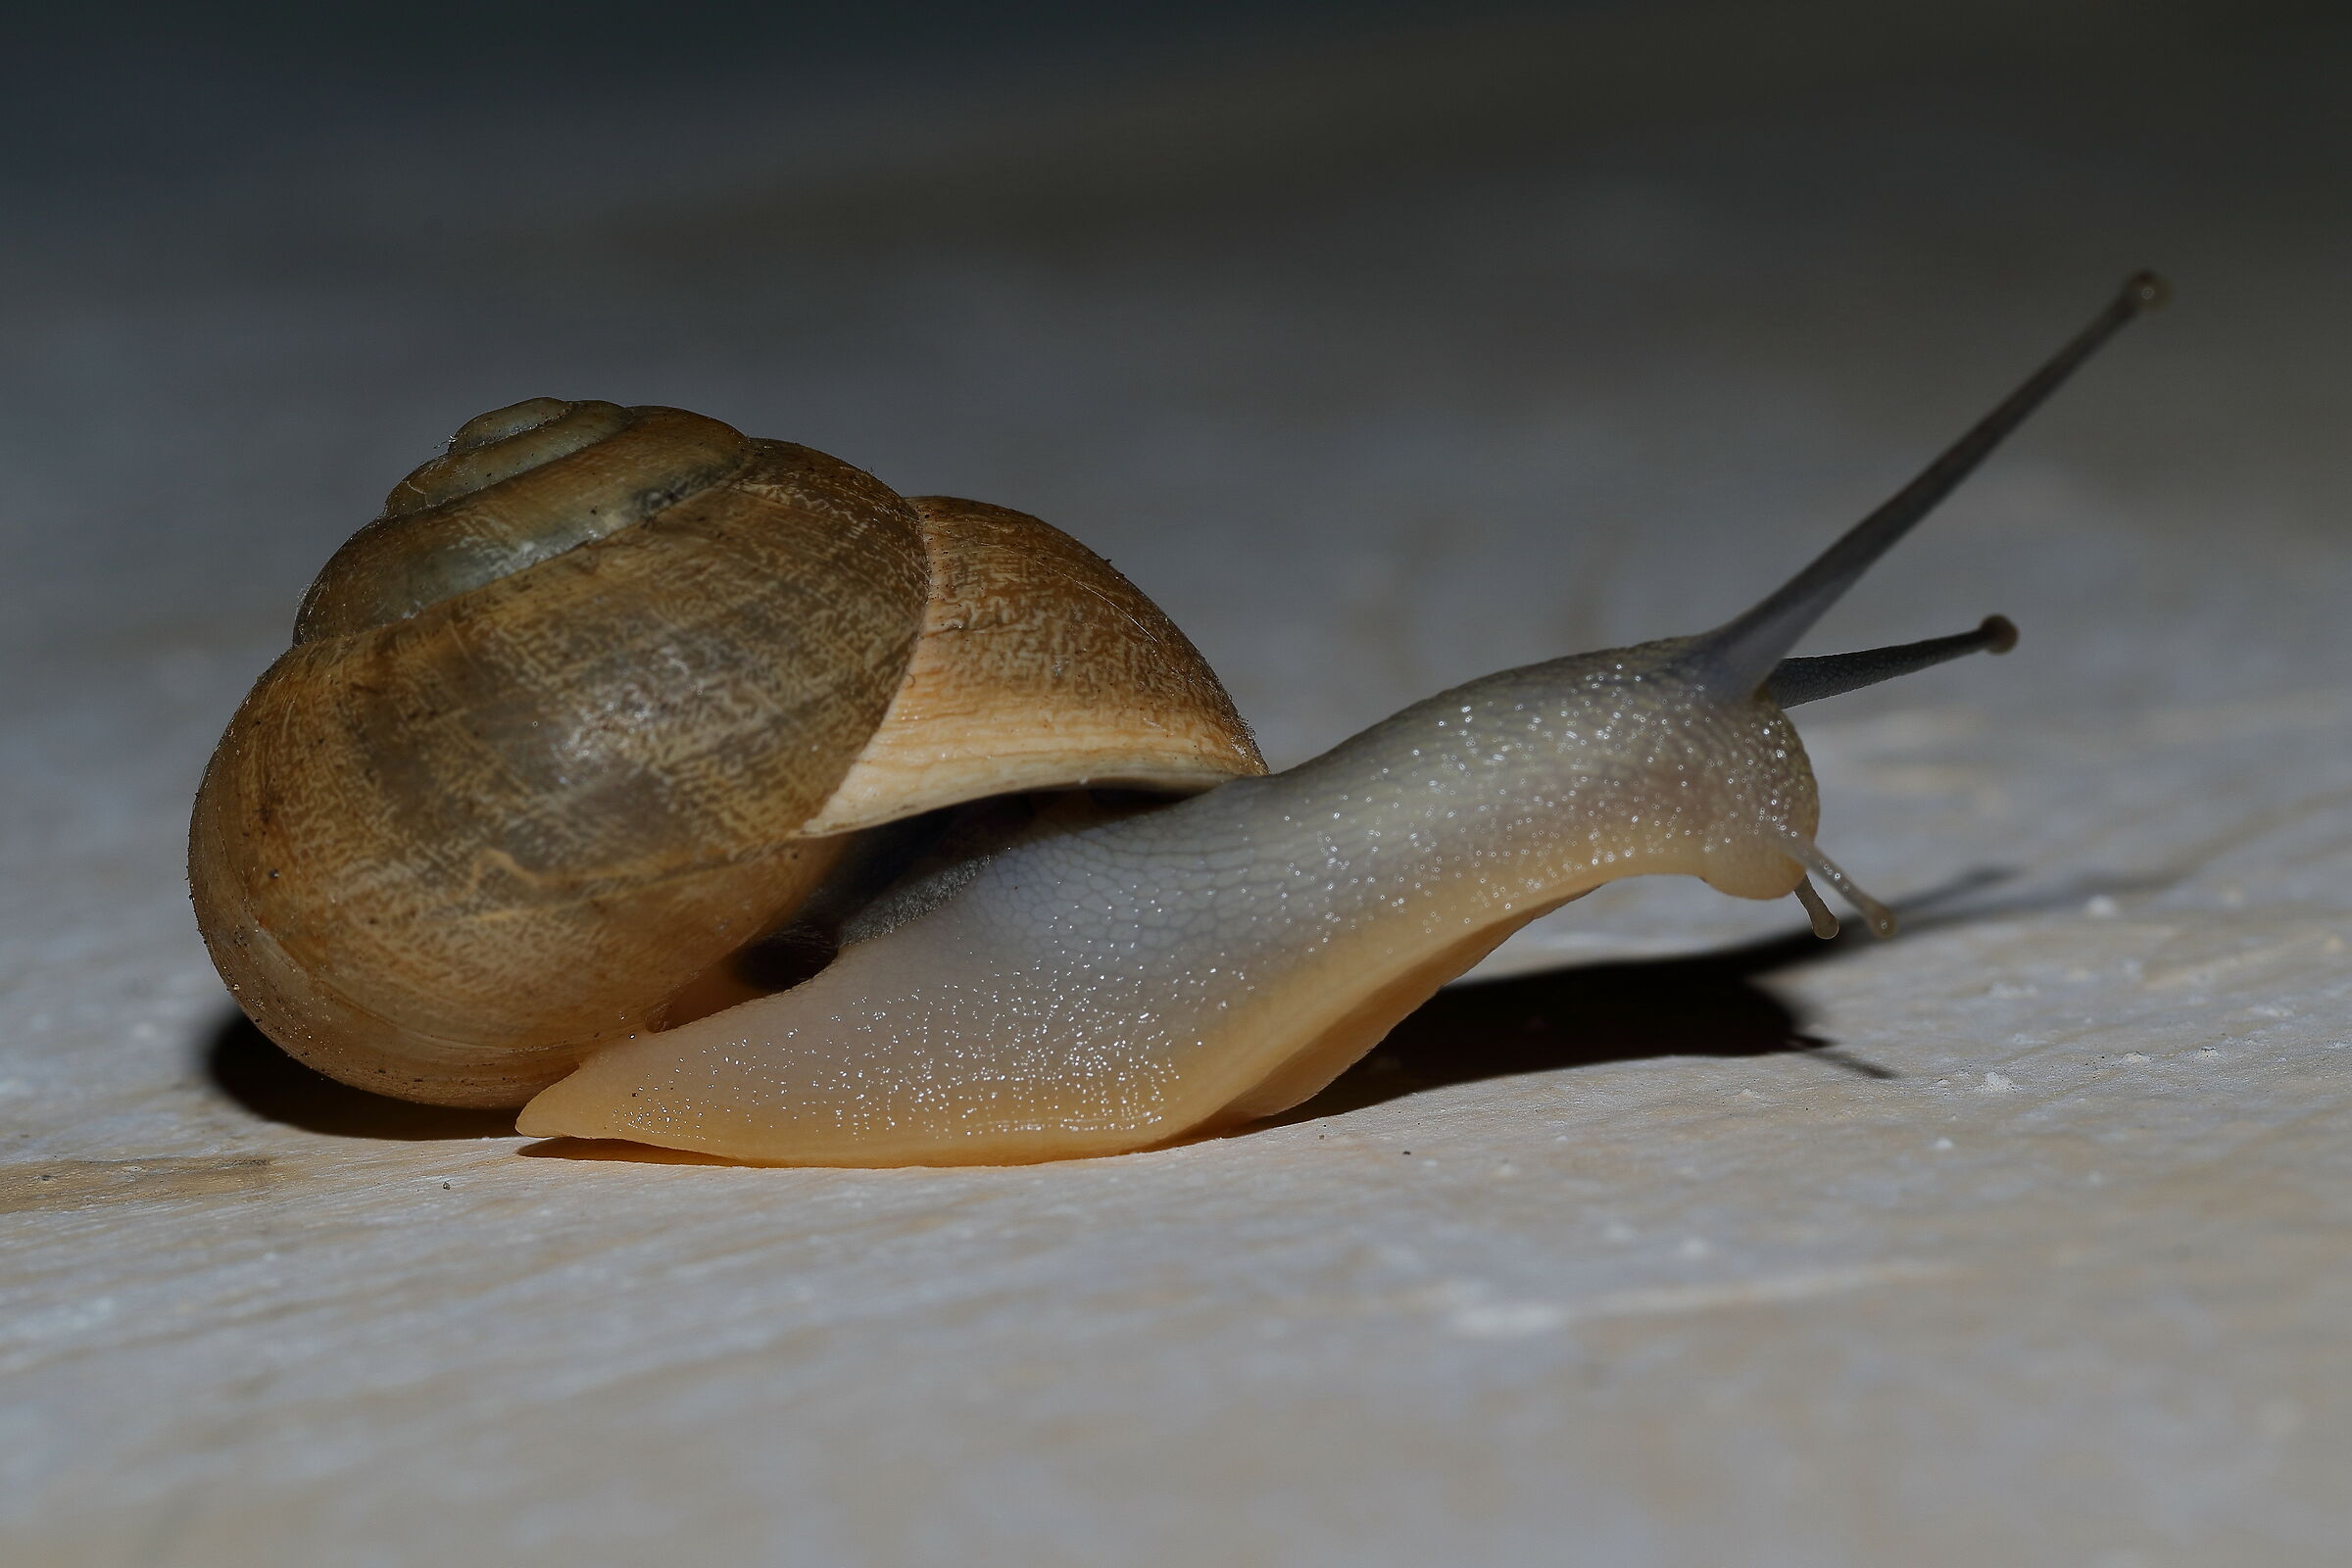 A perfect snail...